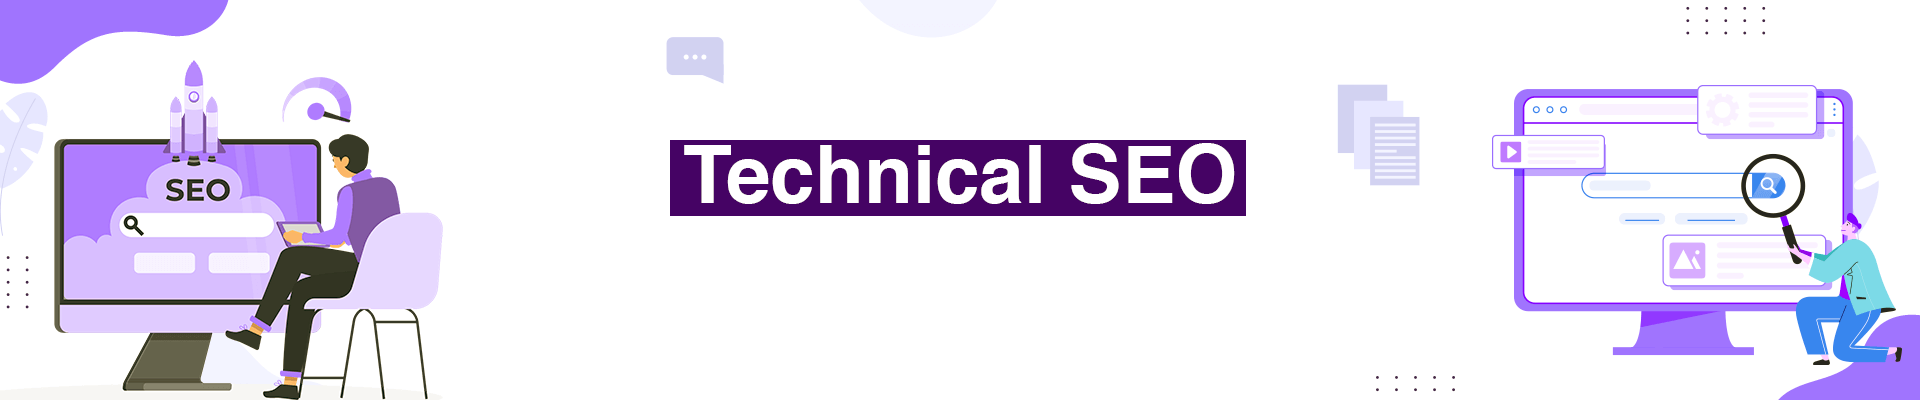 Technical SEO Banner